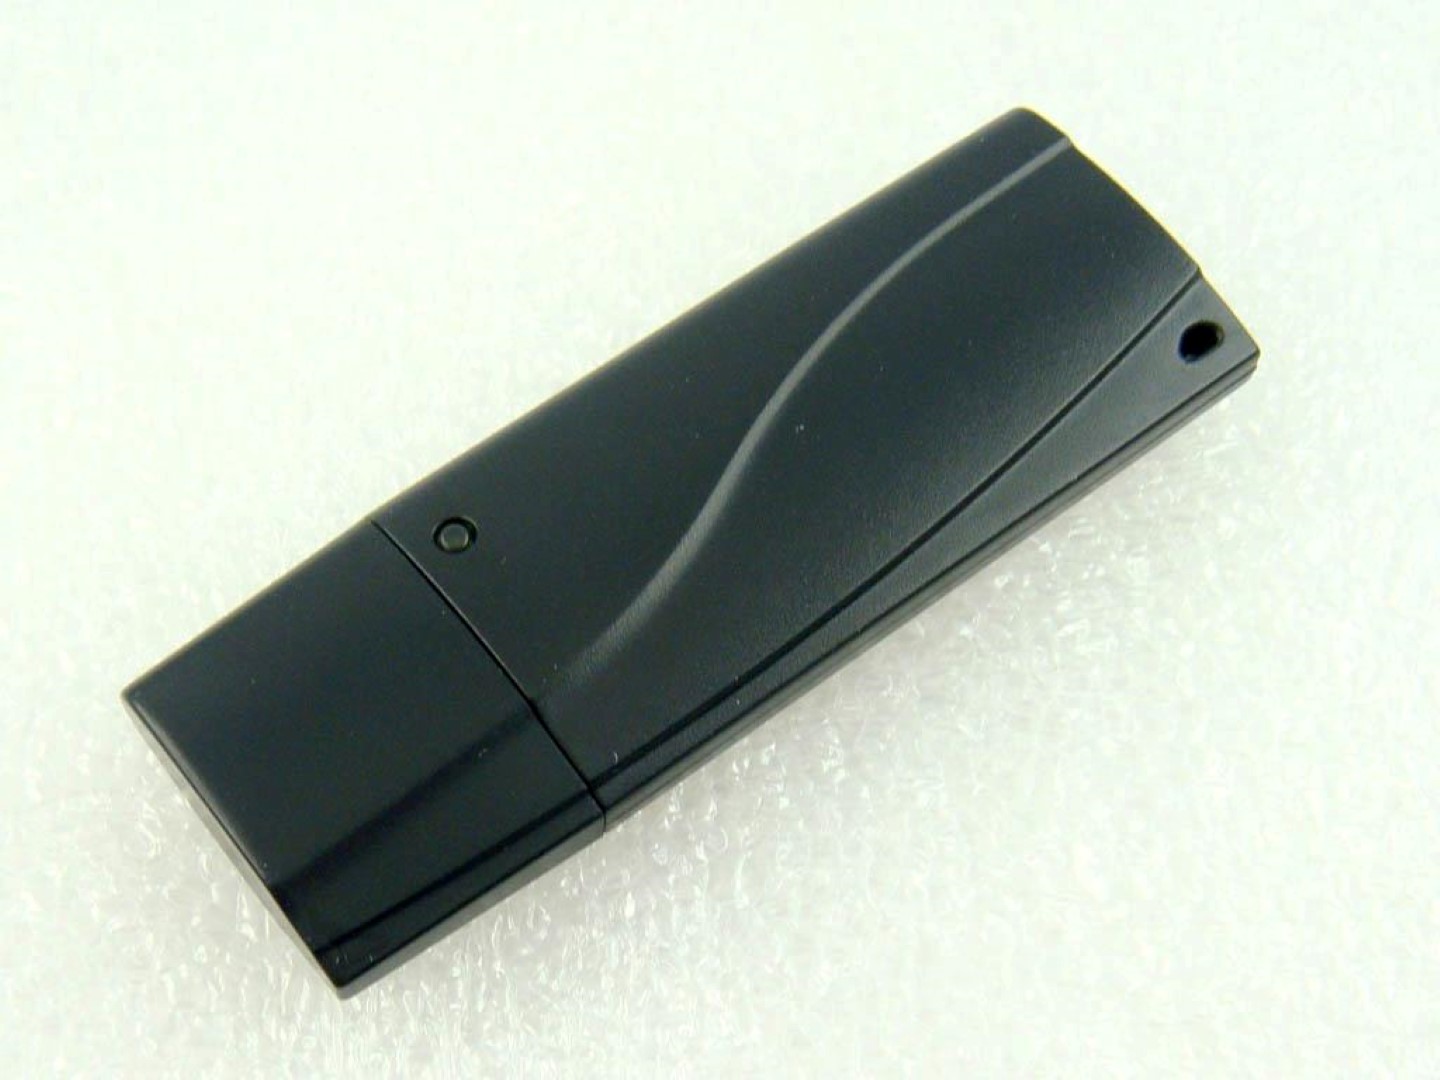 VIA VT6656 USB WIFI Card